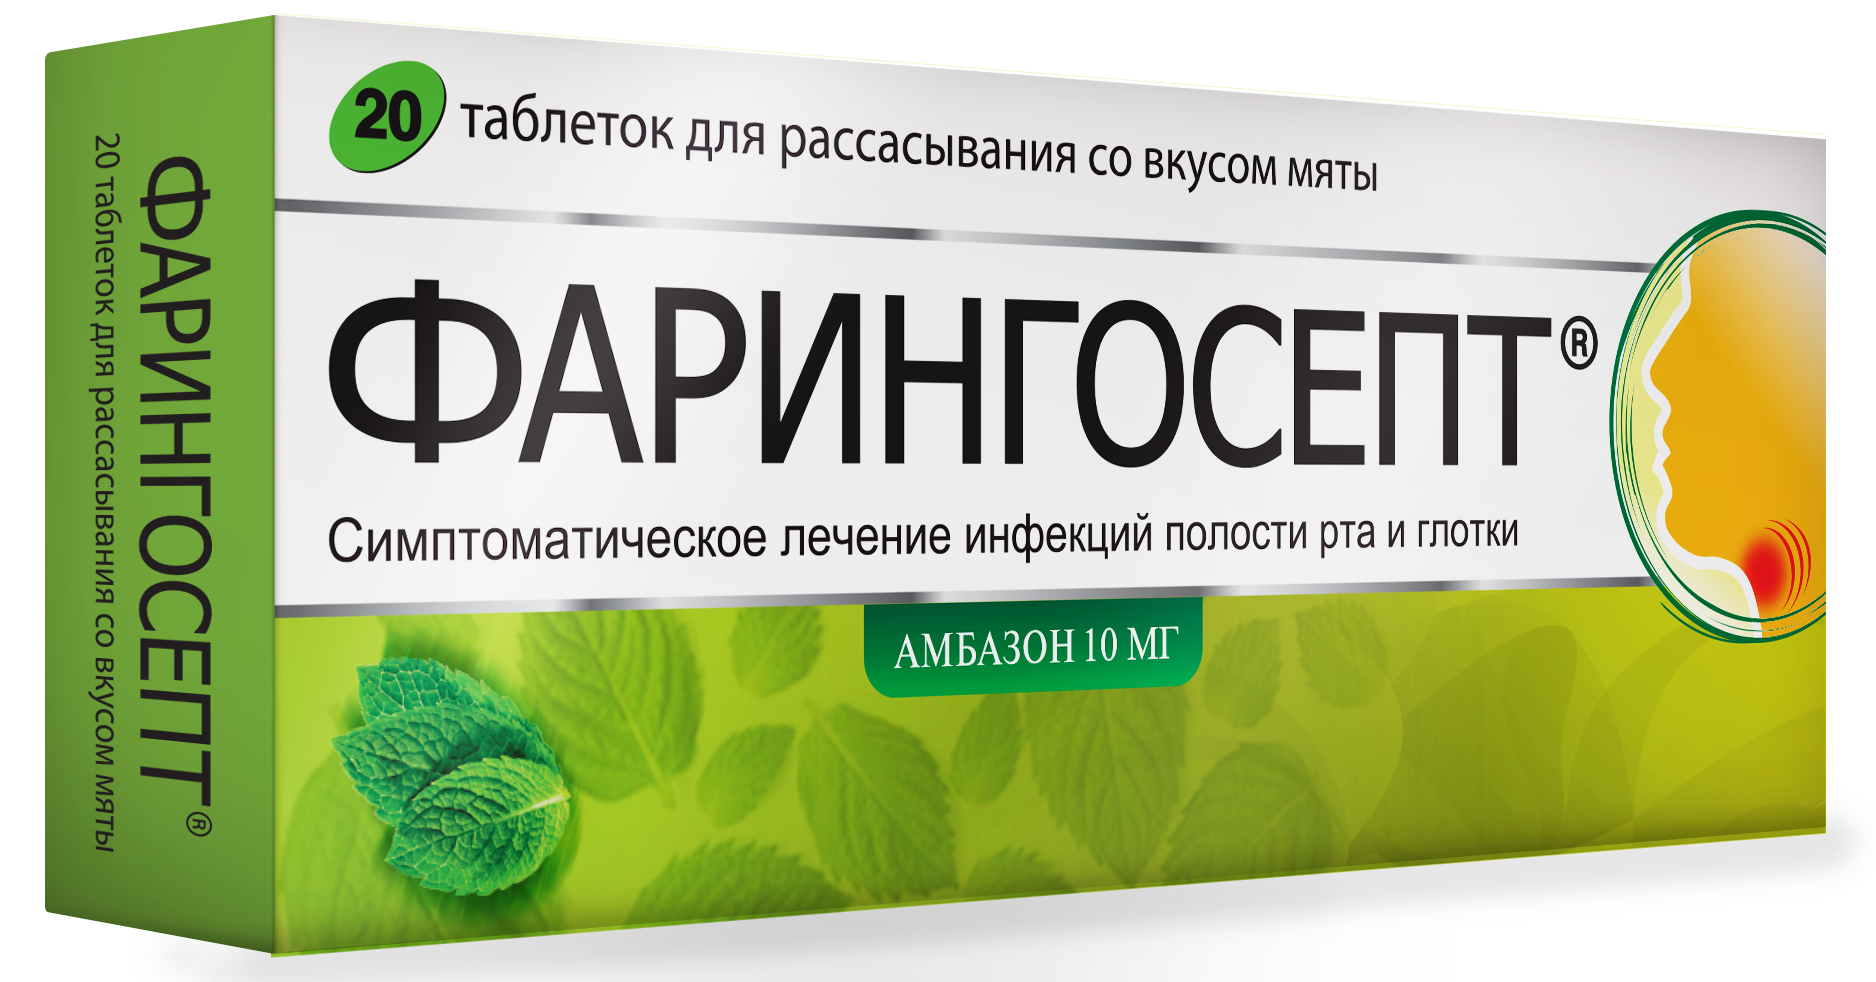 Фарингосепт, таблетки для рассасывания (мята) 10 мг, 20 шт. нео ангин таблетки для рассасывания 16 шт